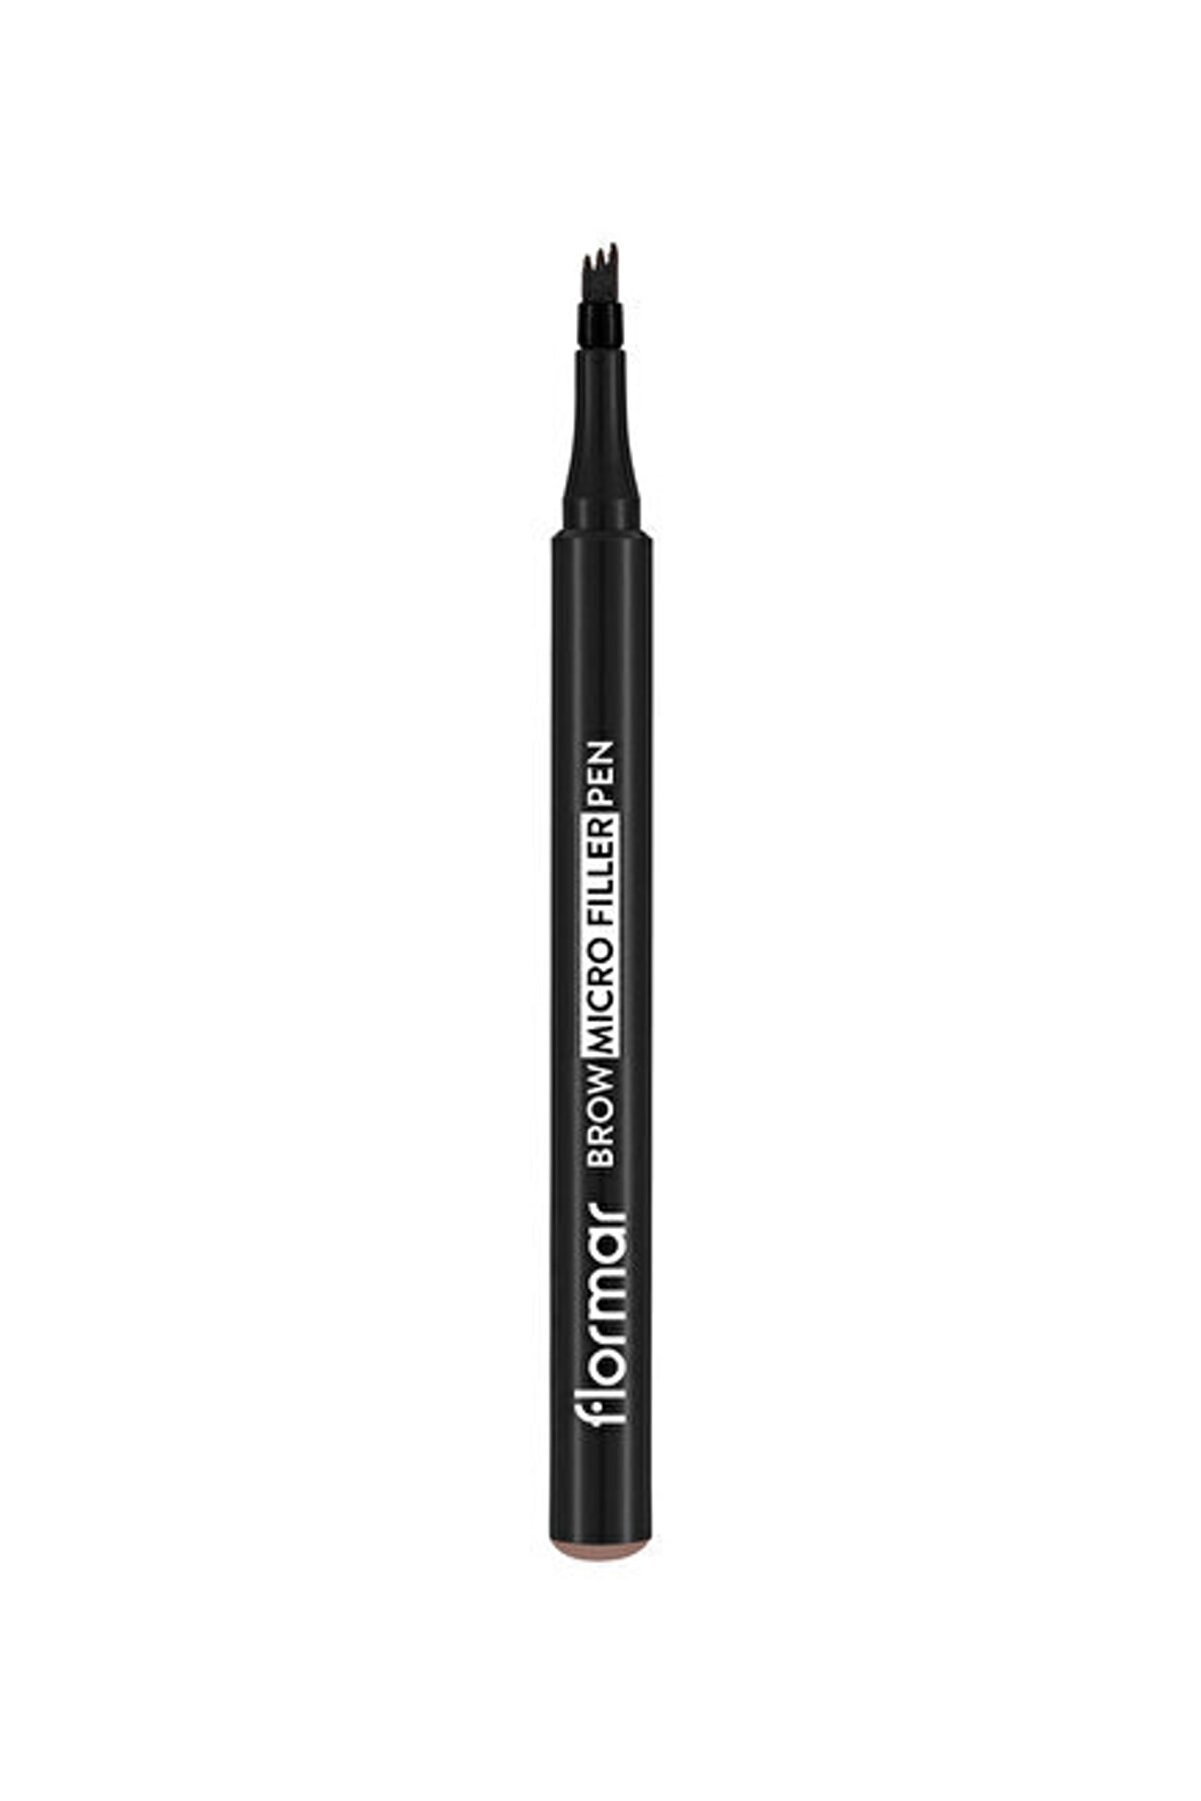 Flormar Fırça Uçlu Likit Kaş Kalemi (açık Kahve) - Brow Micro Filler Pen - 001 - 8682536038515